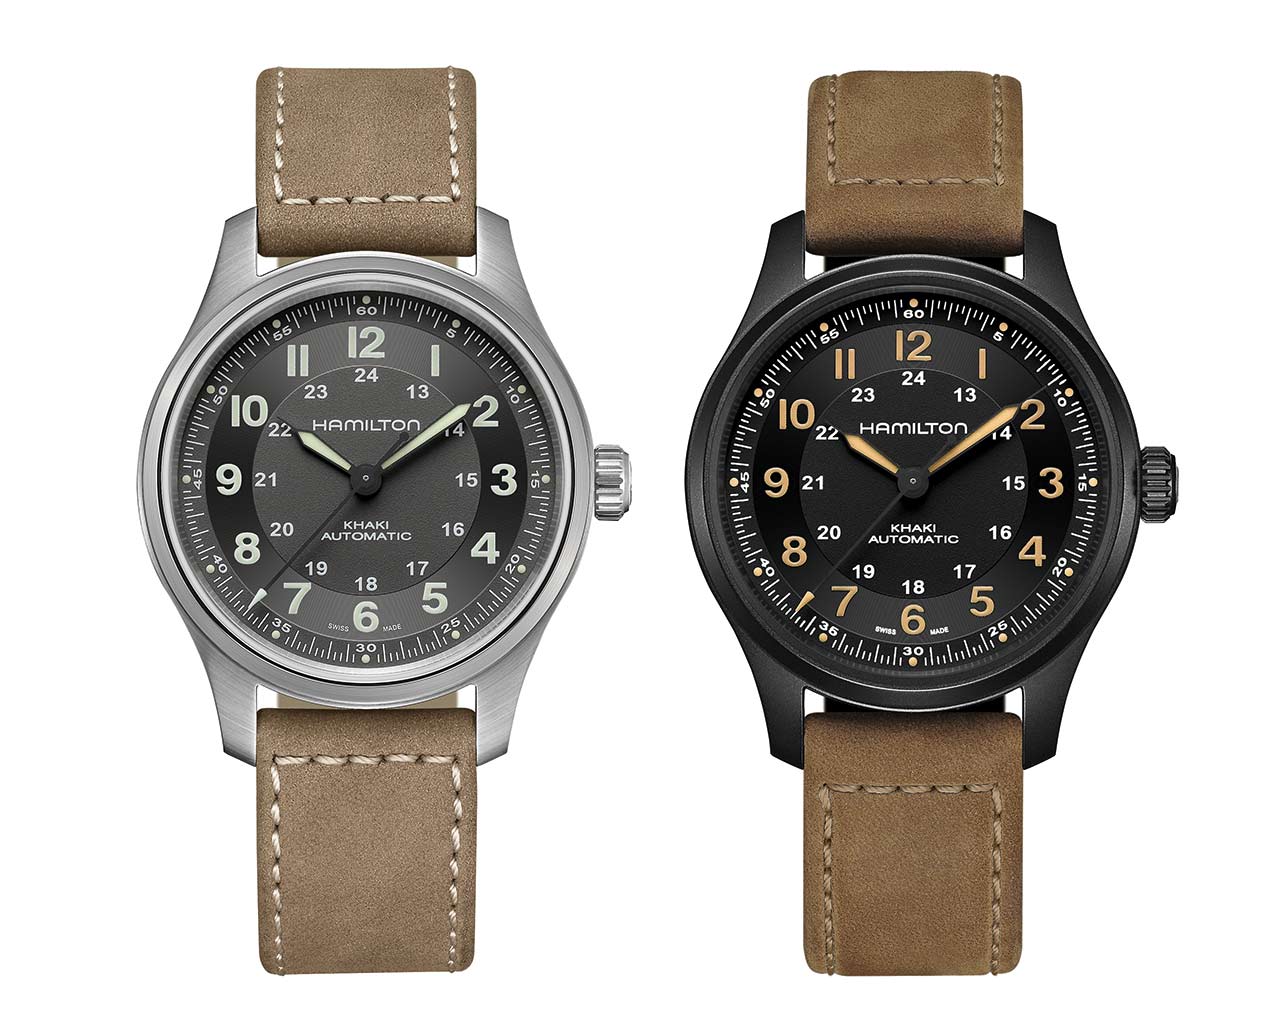 Hamilton - Khaki Field Titanium | Time and Watches | The watch blog